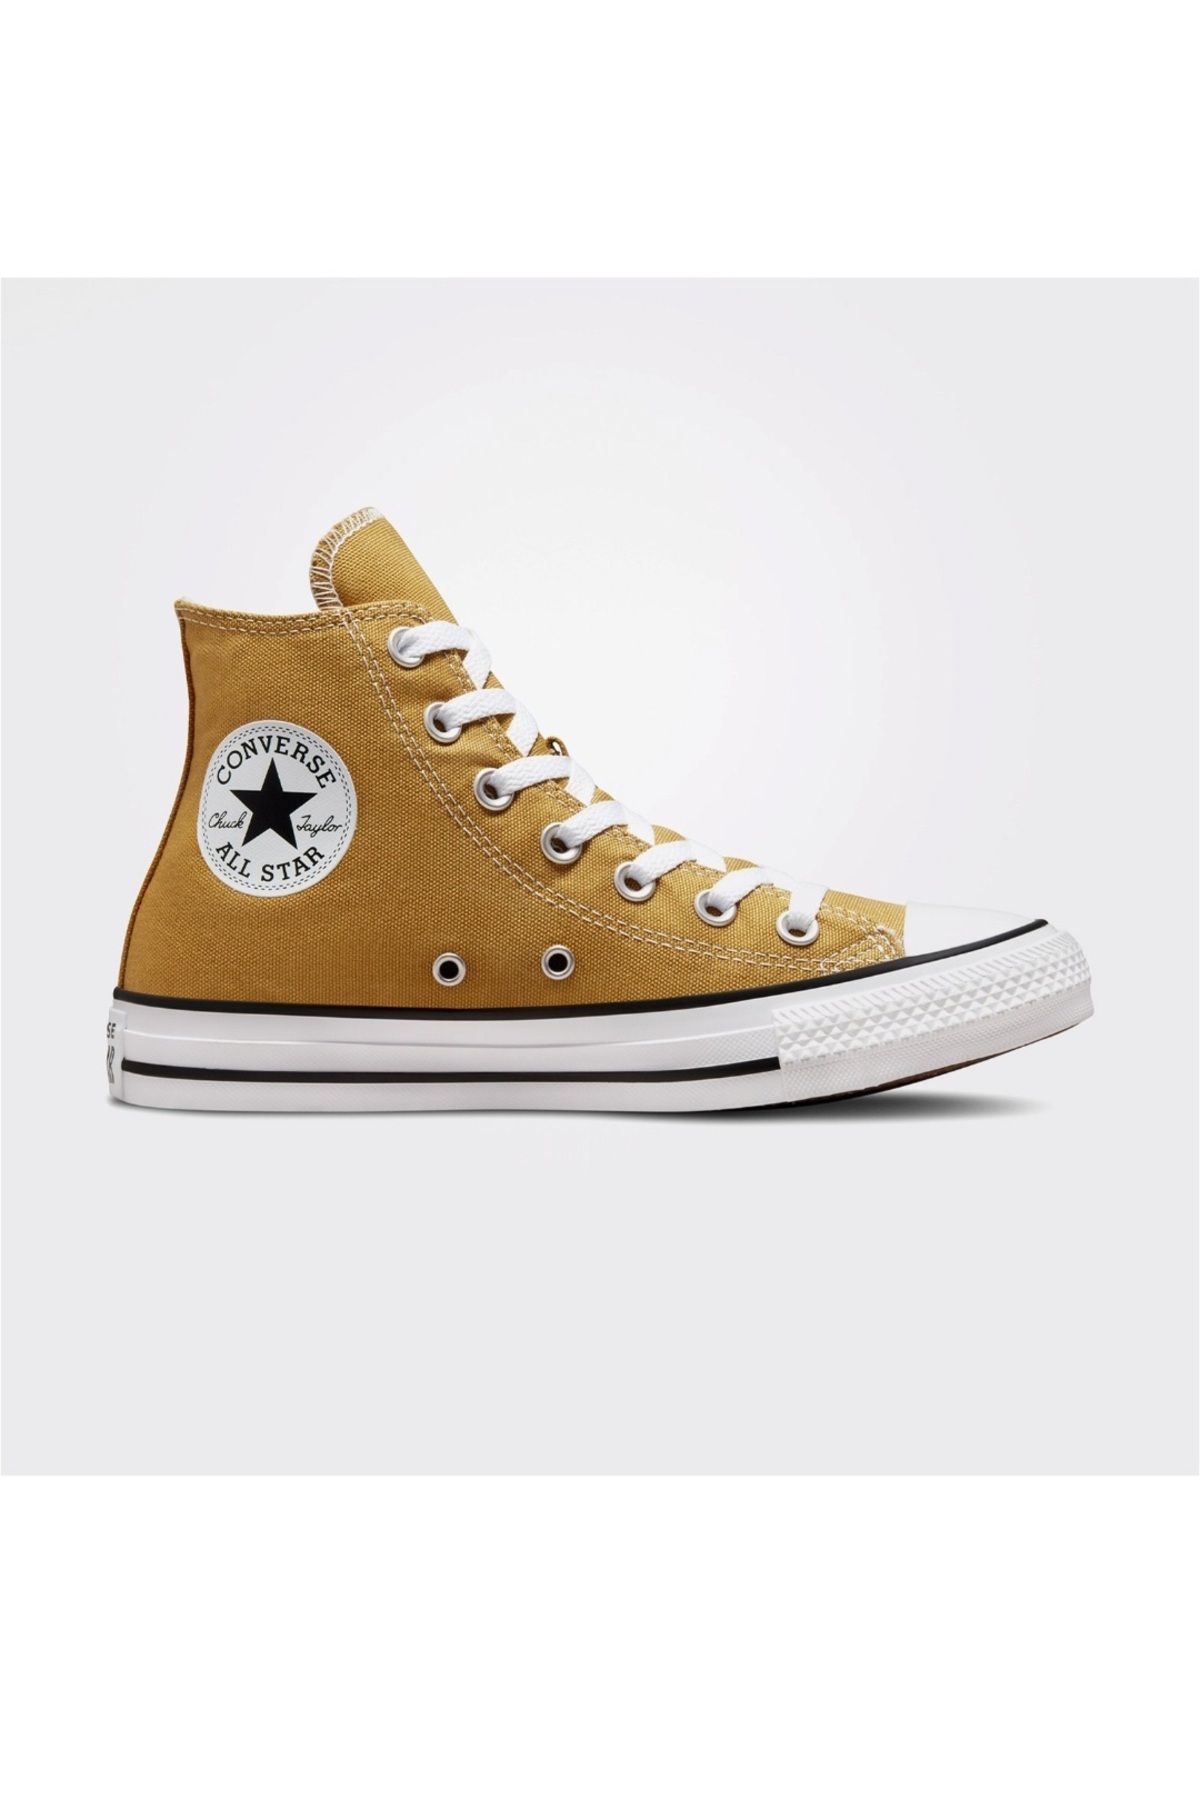 Converse CTAS/A02785C Converse Chuck Taylor All Star Seasonal Color Unisex Sarı ( Hardal ) Sneaker